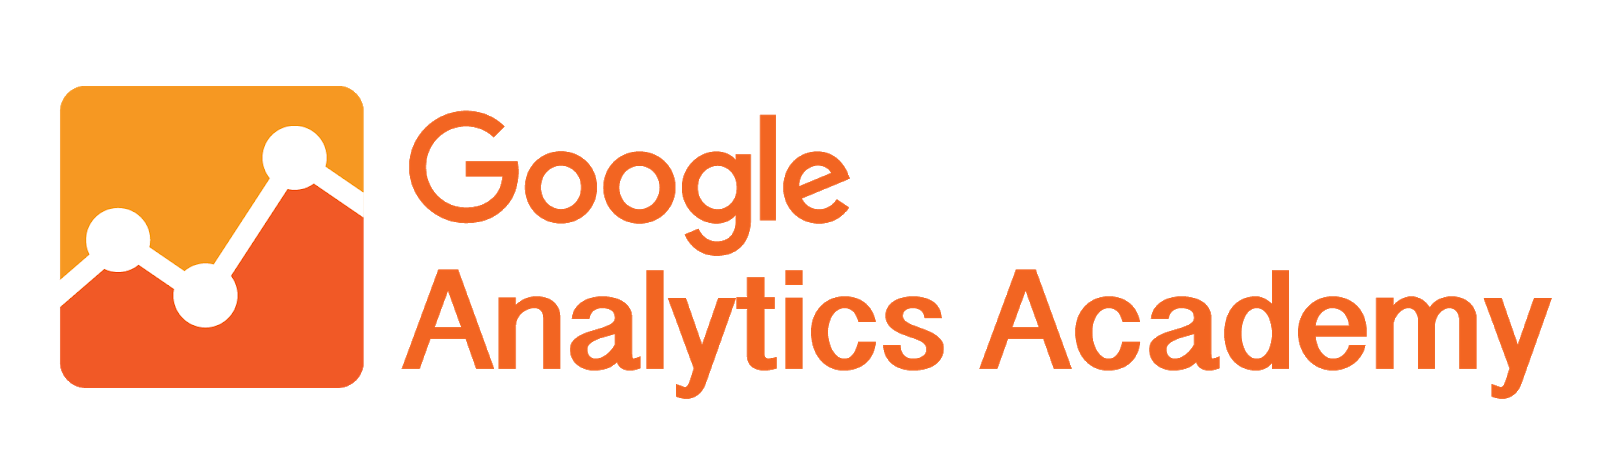 Giggle academy. Google Analytics. Google Analytics Academy. Google Analytics логотип.